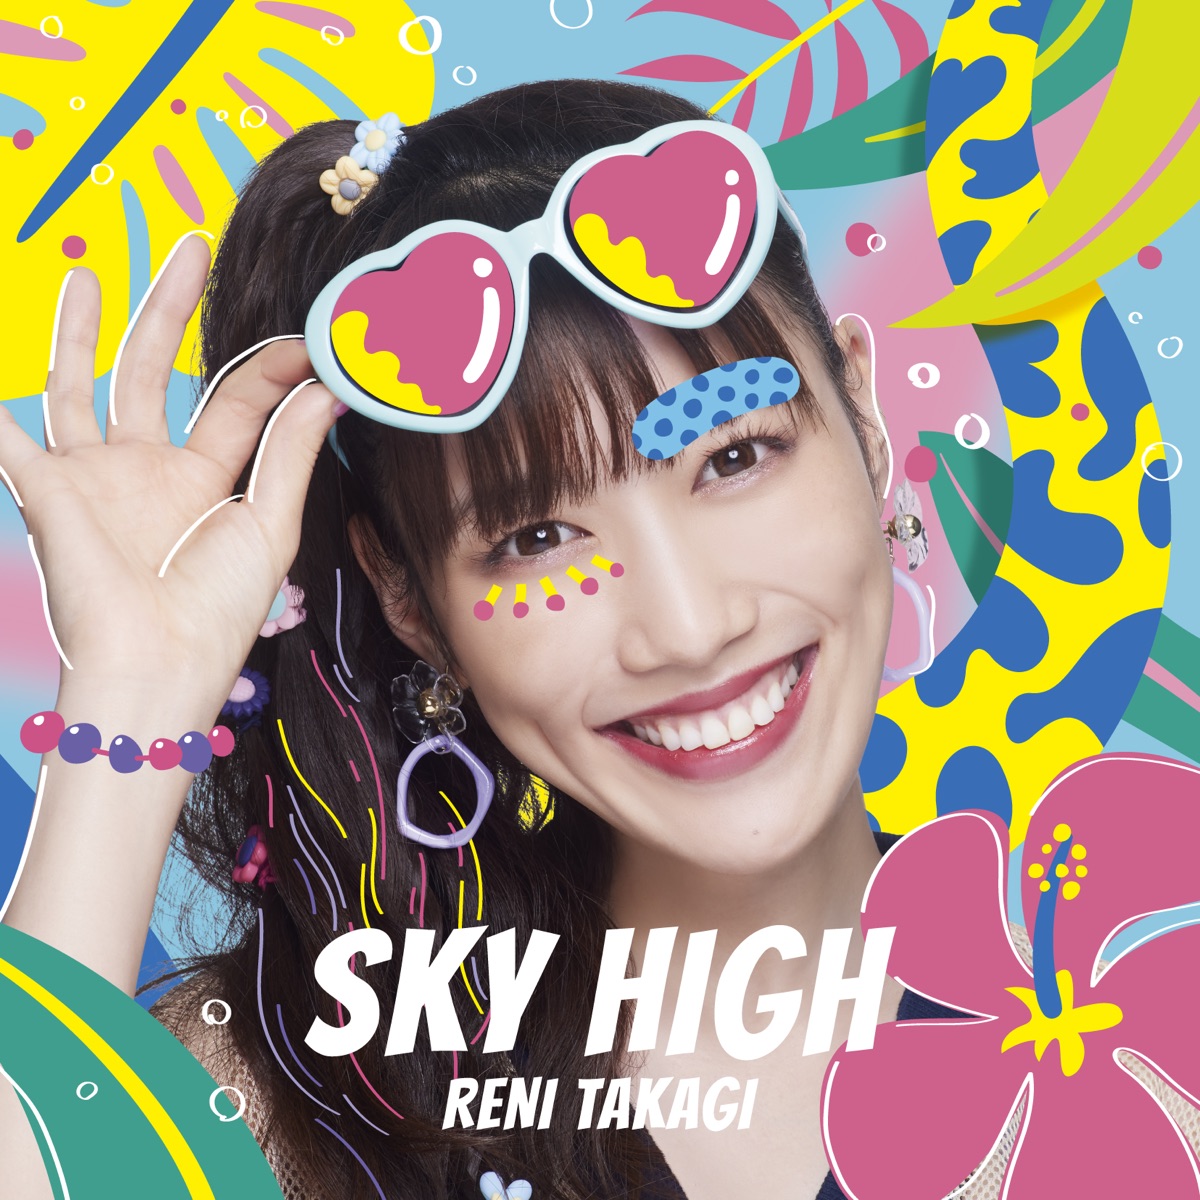 Cover art for『Reni Takagi - SKY HIGH』from the release『SKY HIGH』